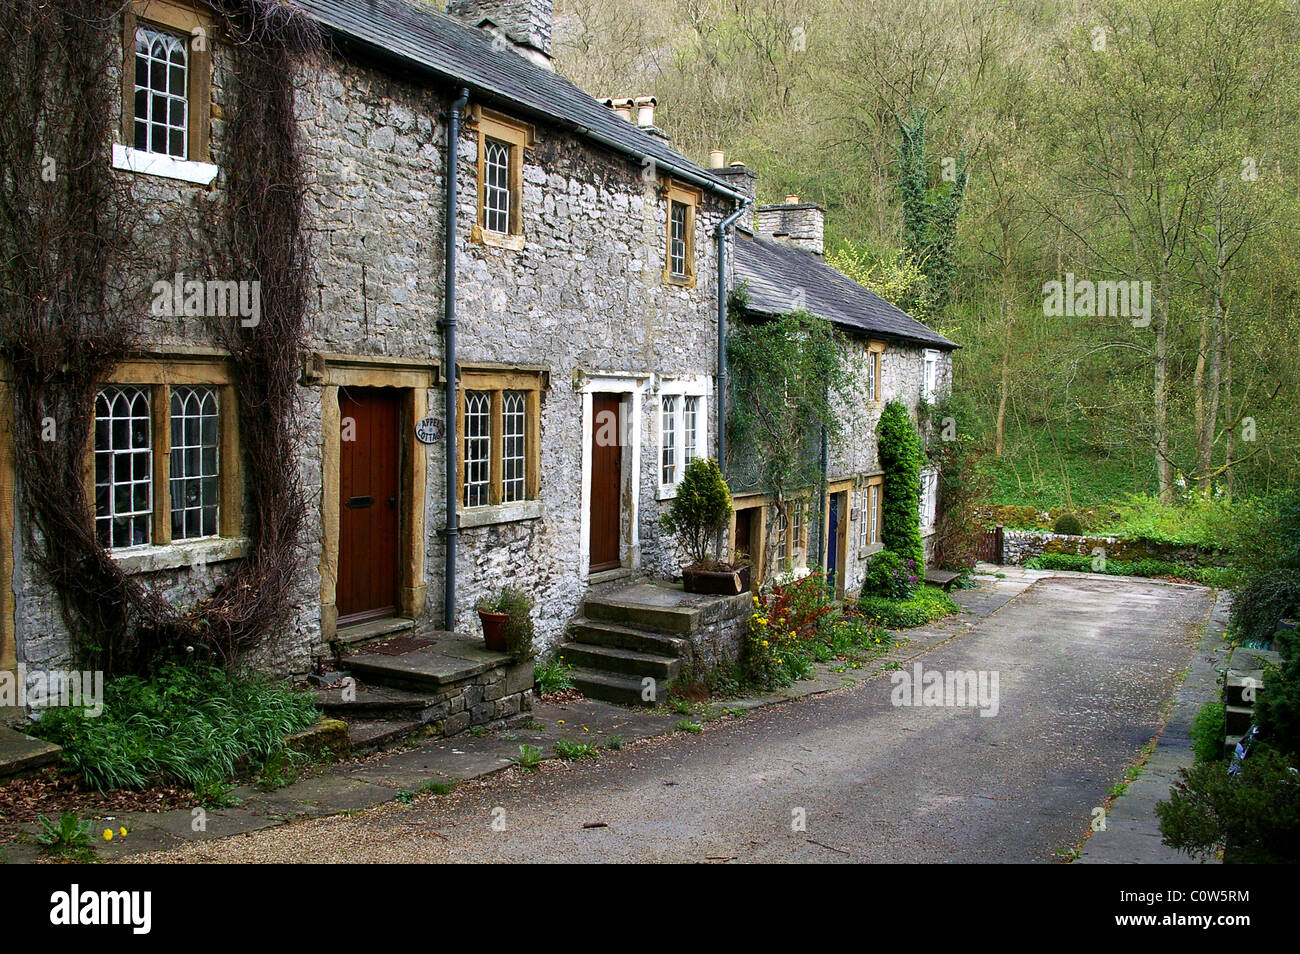 Ravensdale Cottages, Cressbrook im Peak District, Derbyshire, Großbritannien. Stockfoto